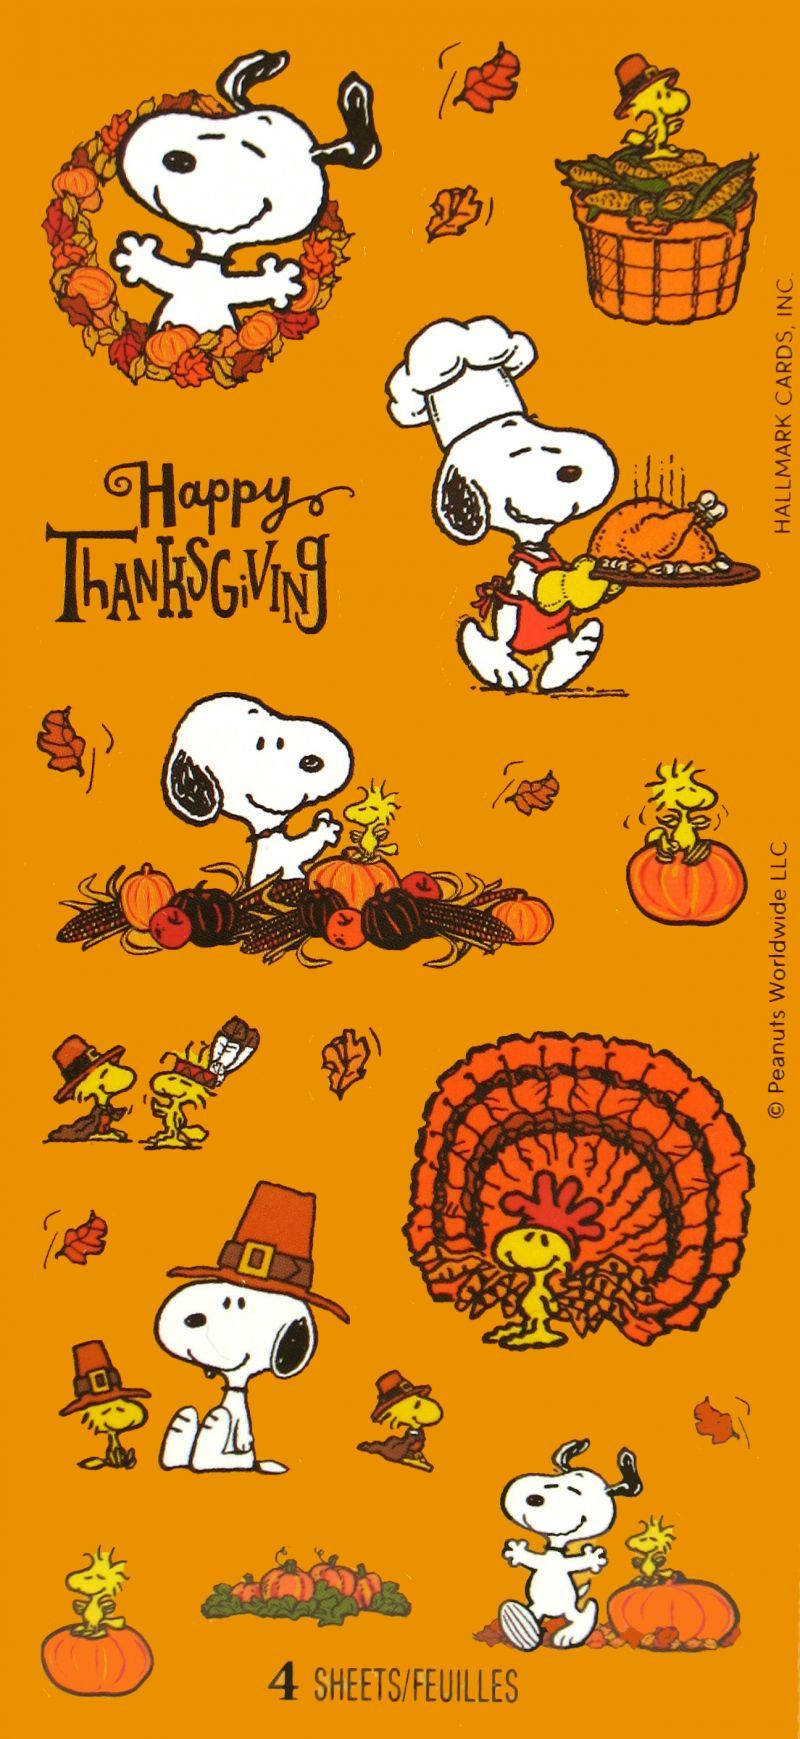 Peanuts Thanksgiving Art Collage Wallpaper